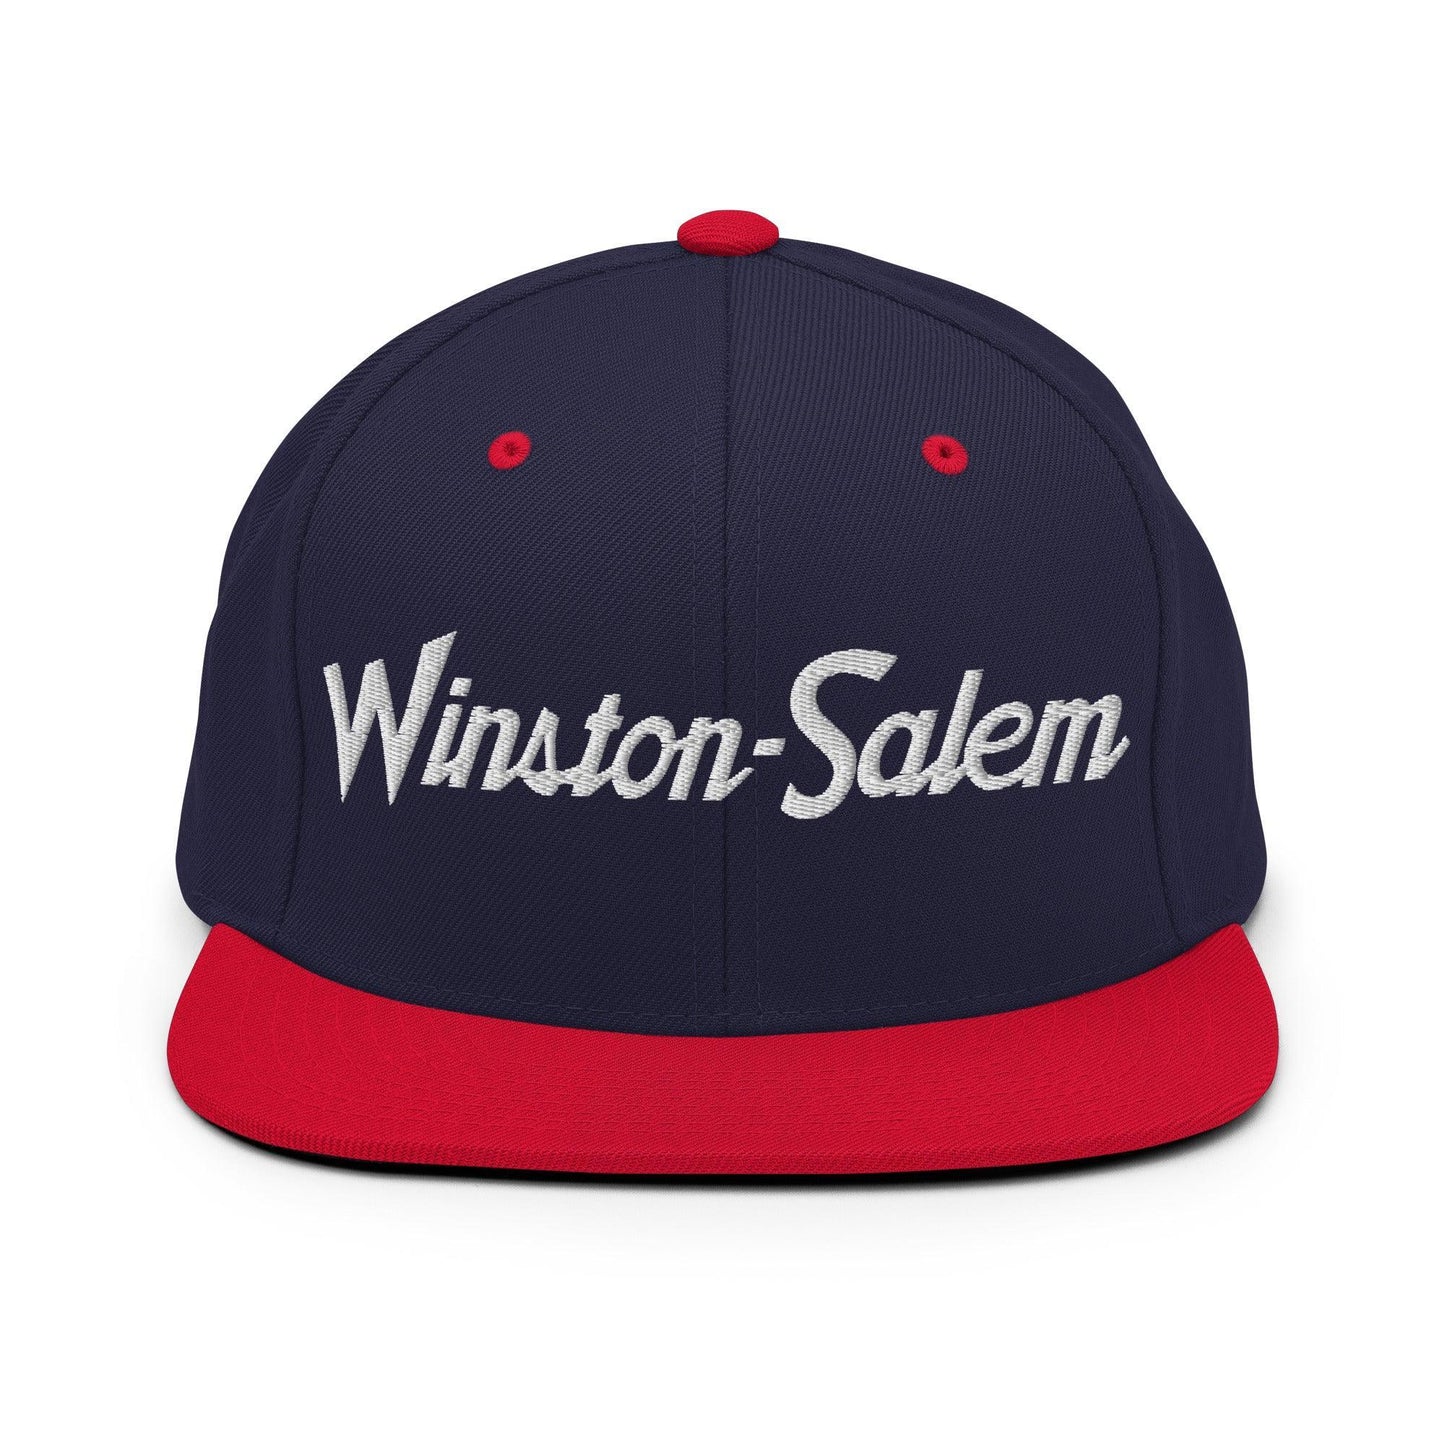 Winston-Salem Script Snapback Hat Navy/ Red